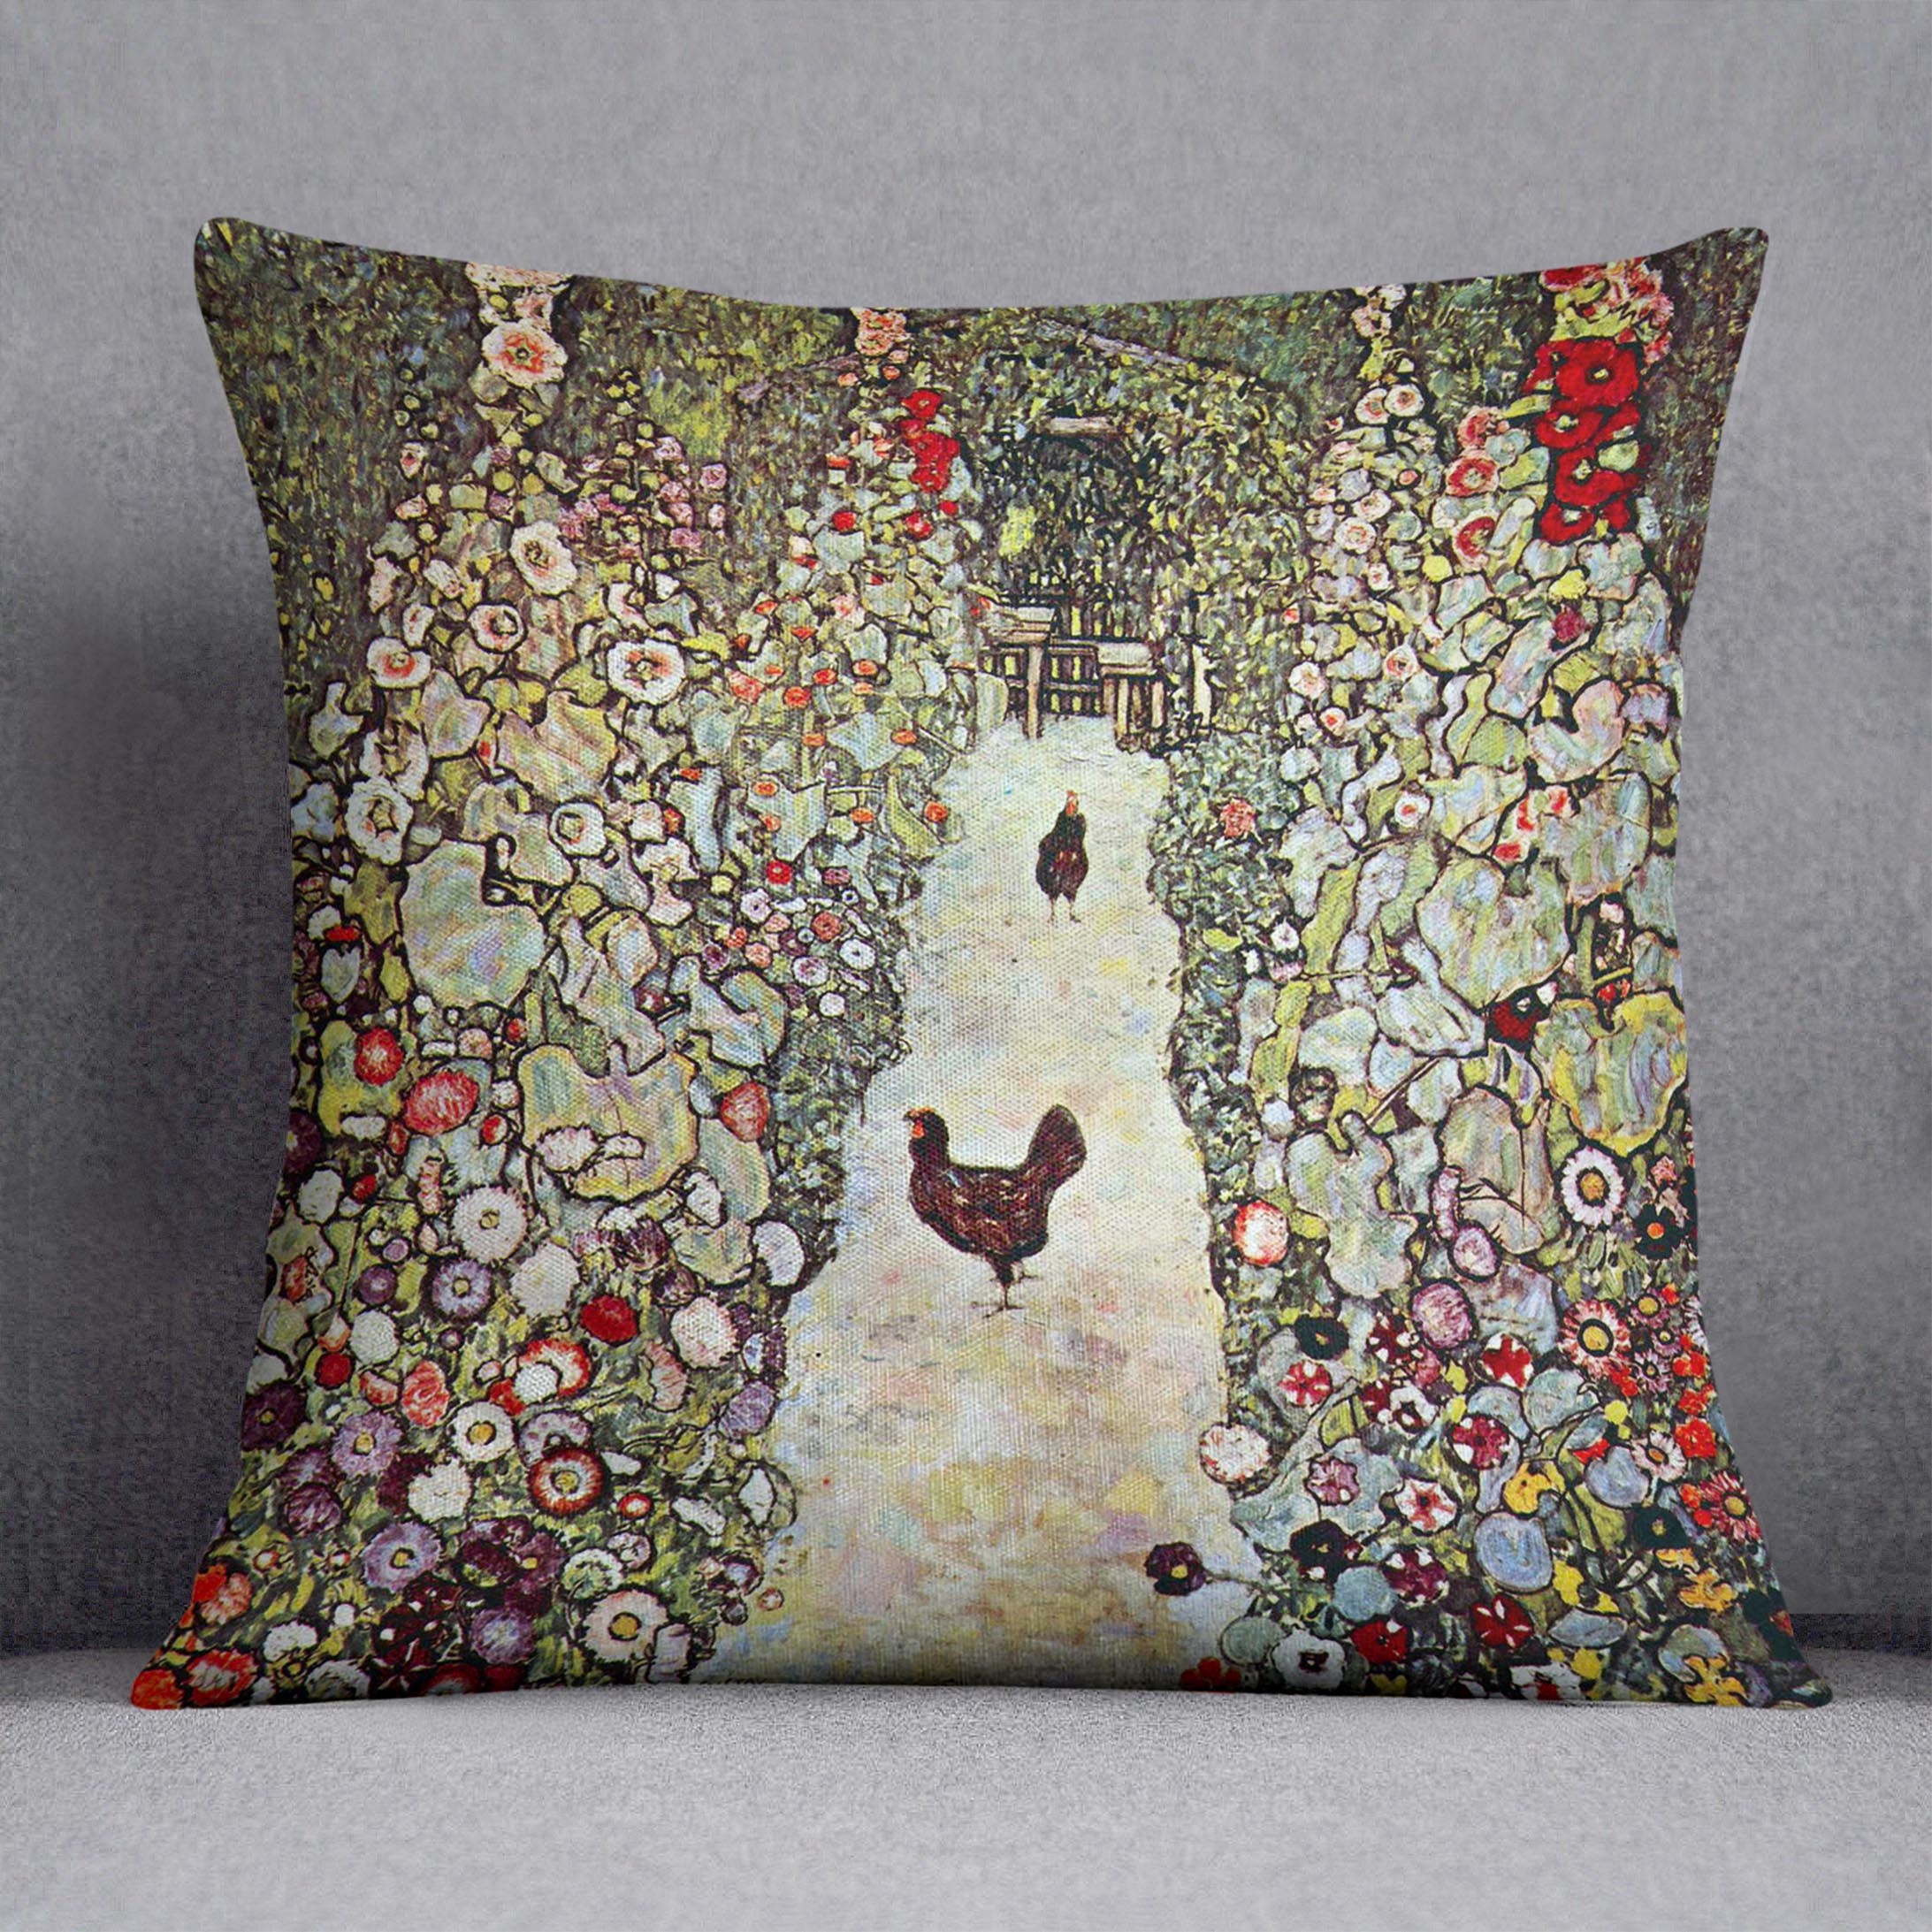 Garden Path with Chickens by Klimt Cushion